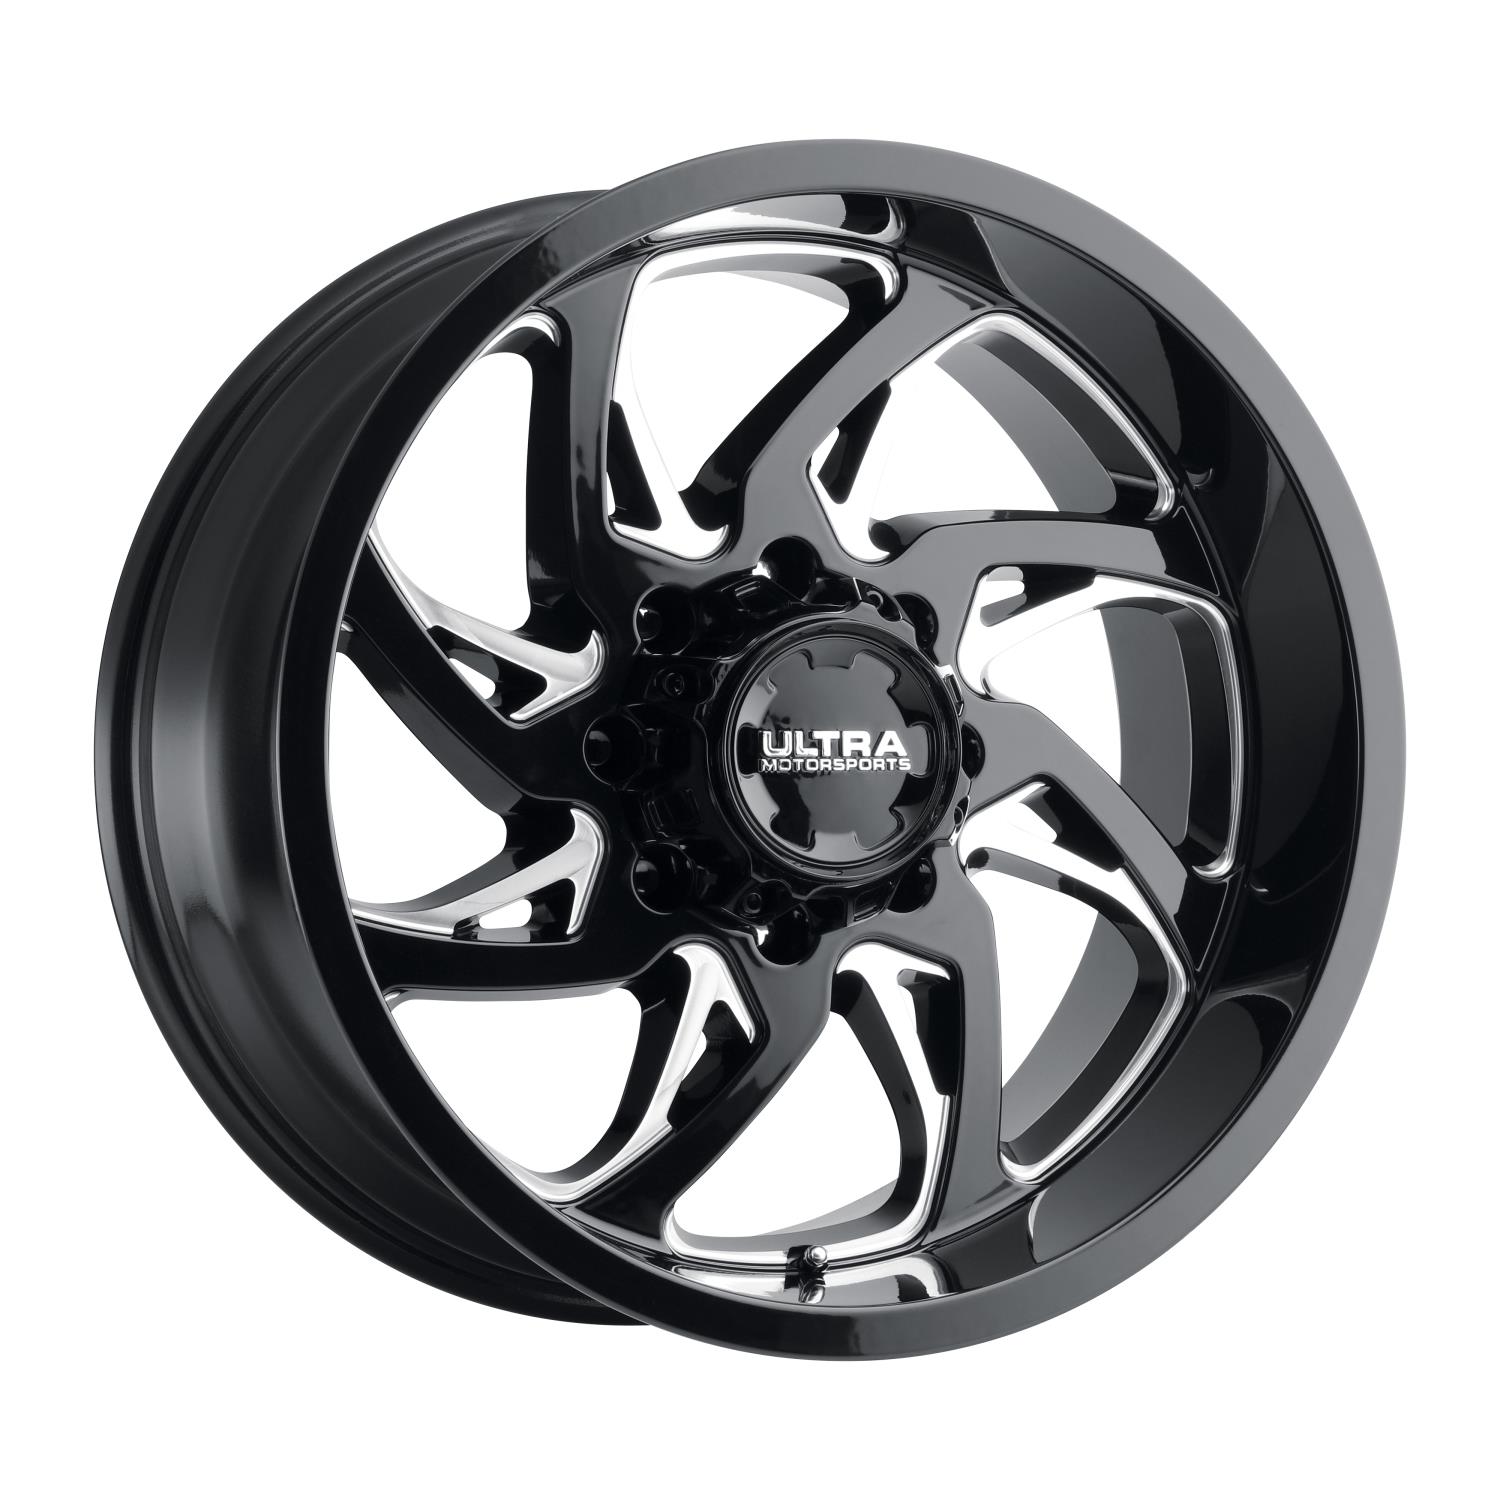 230-Series Villain Wheel, Size: 18x9", Bolt Pattern: 5x150 mm [Gloss Black w/Milled Accents]